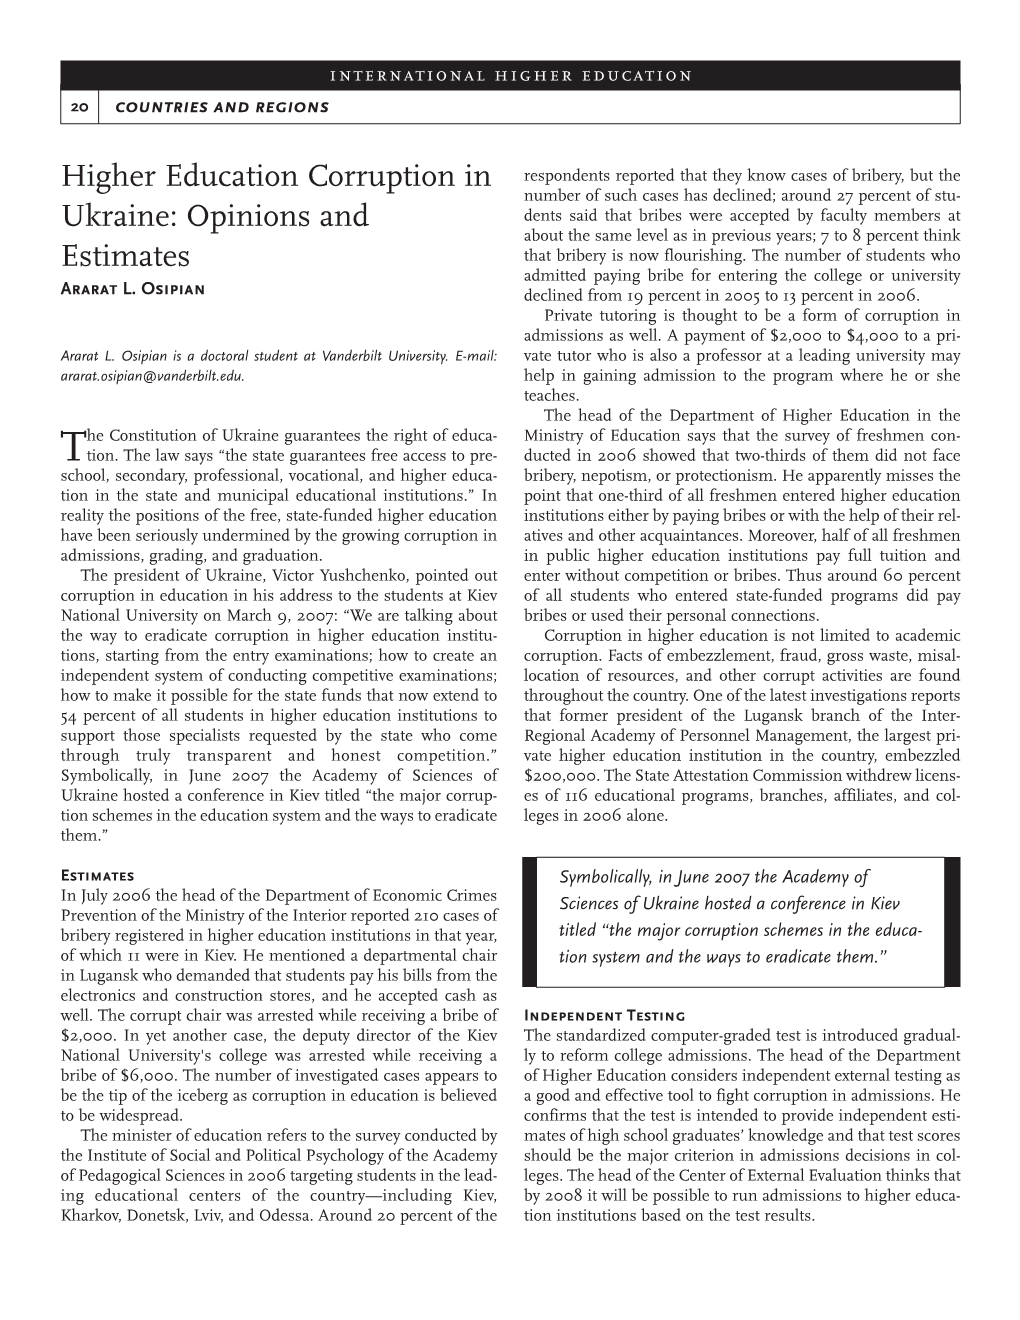 Higher Education Corruption in Ukraine